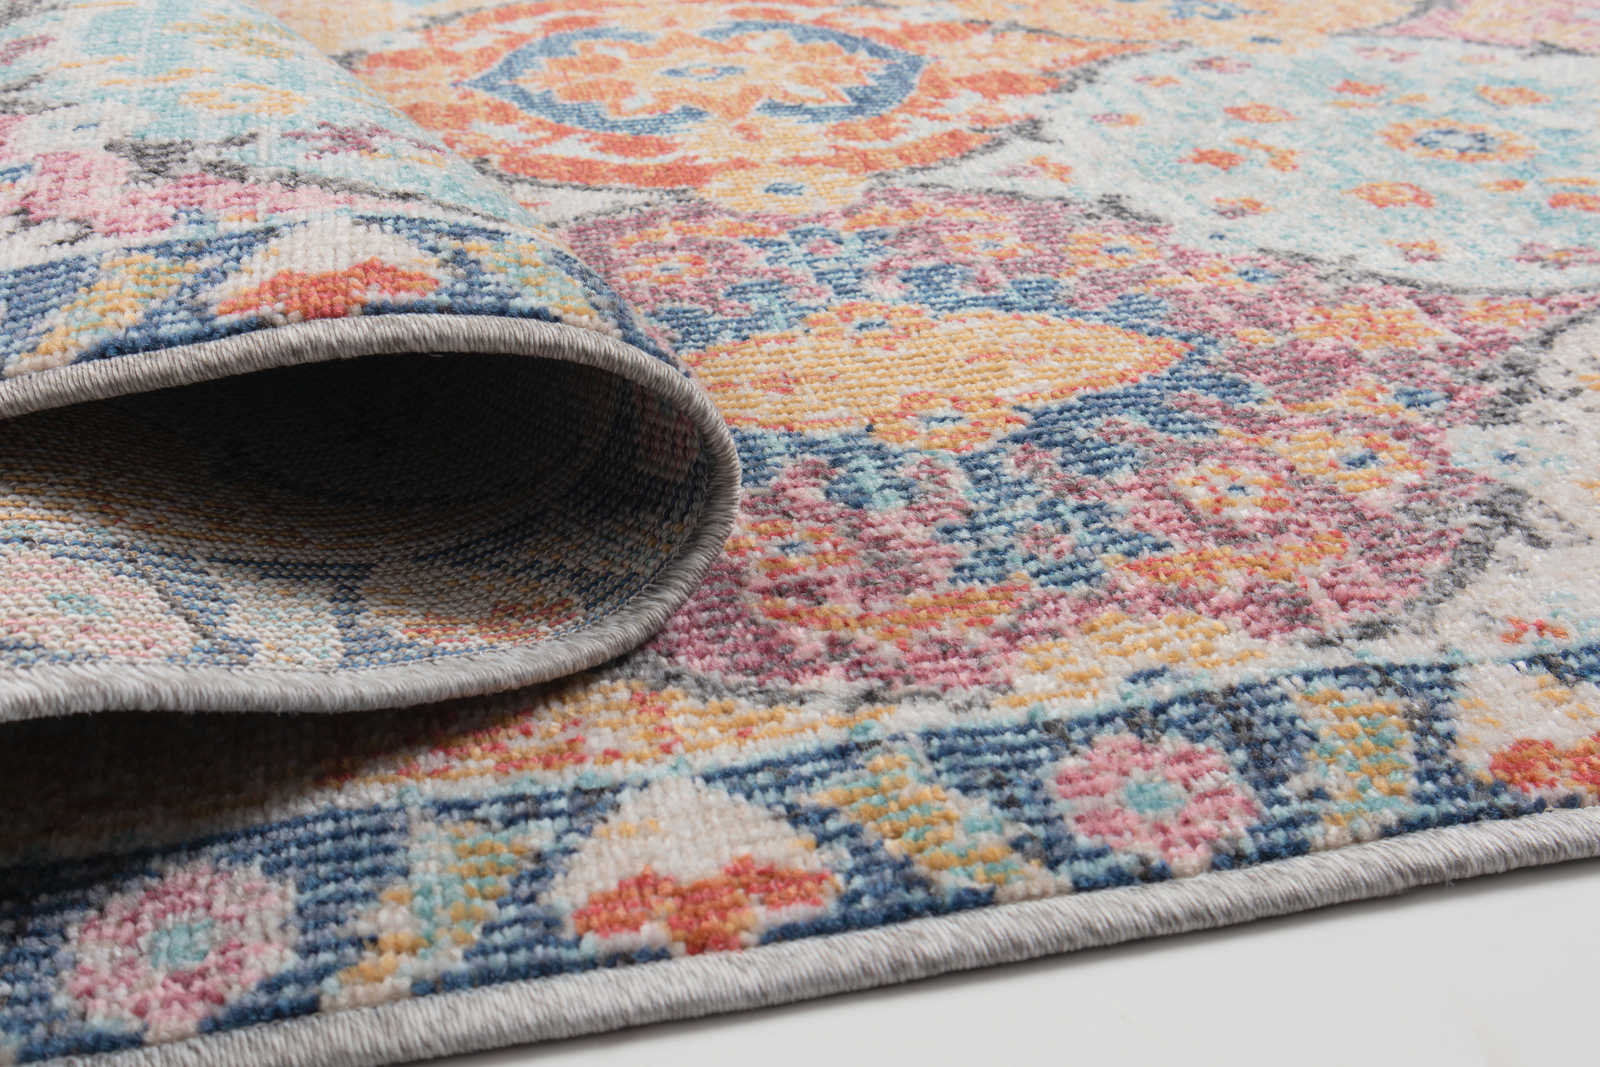             Bunter Outdoor Teppich aus Flachgewebe – 150 x 80 cm
        